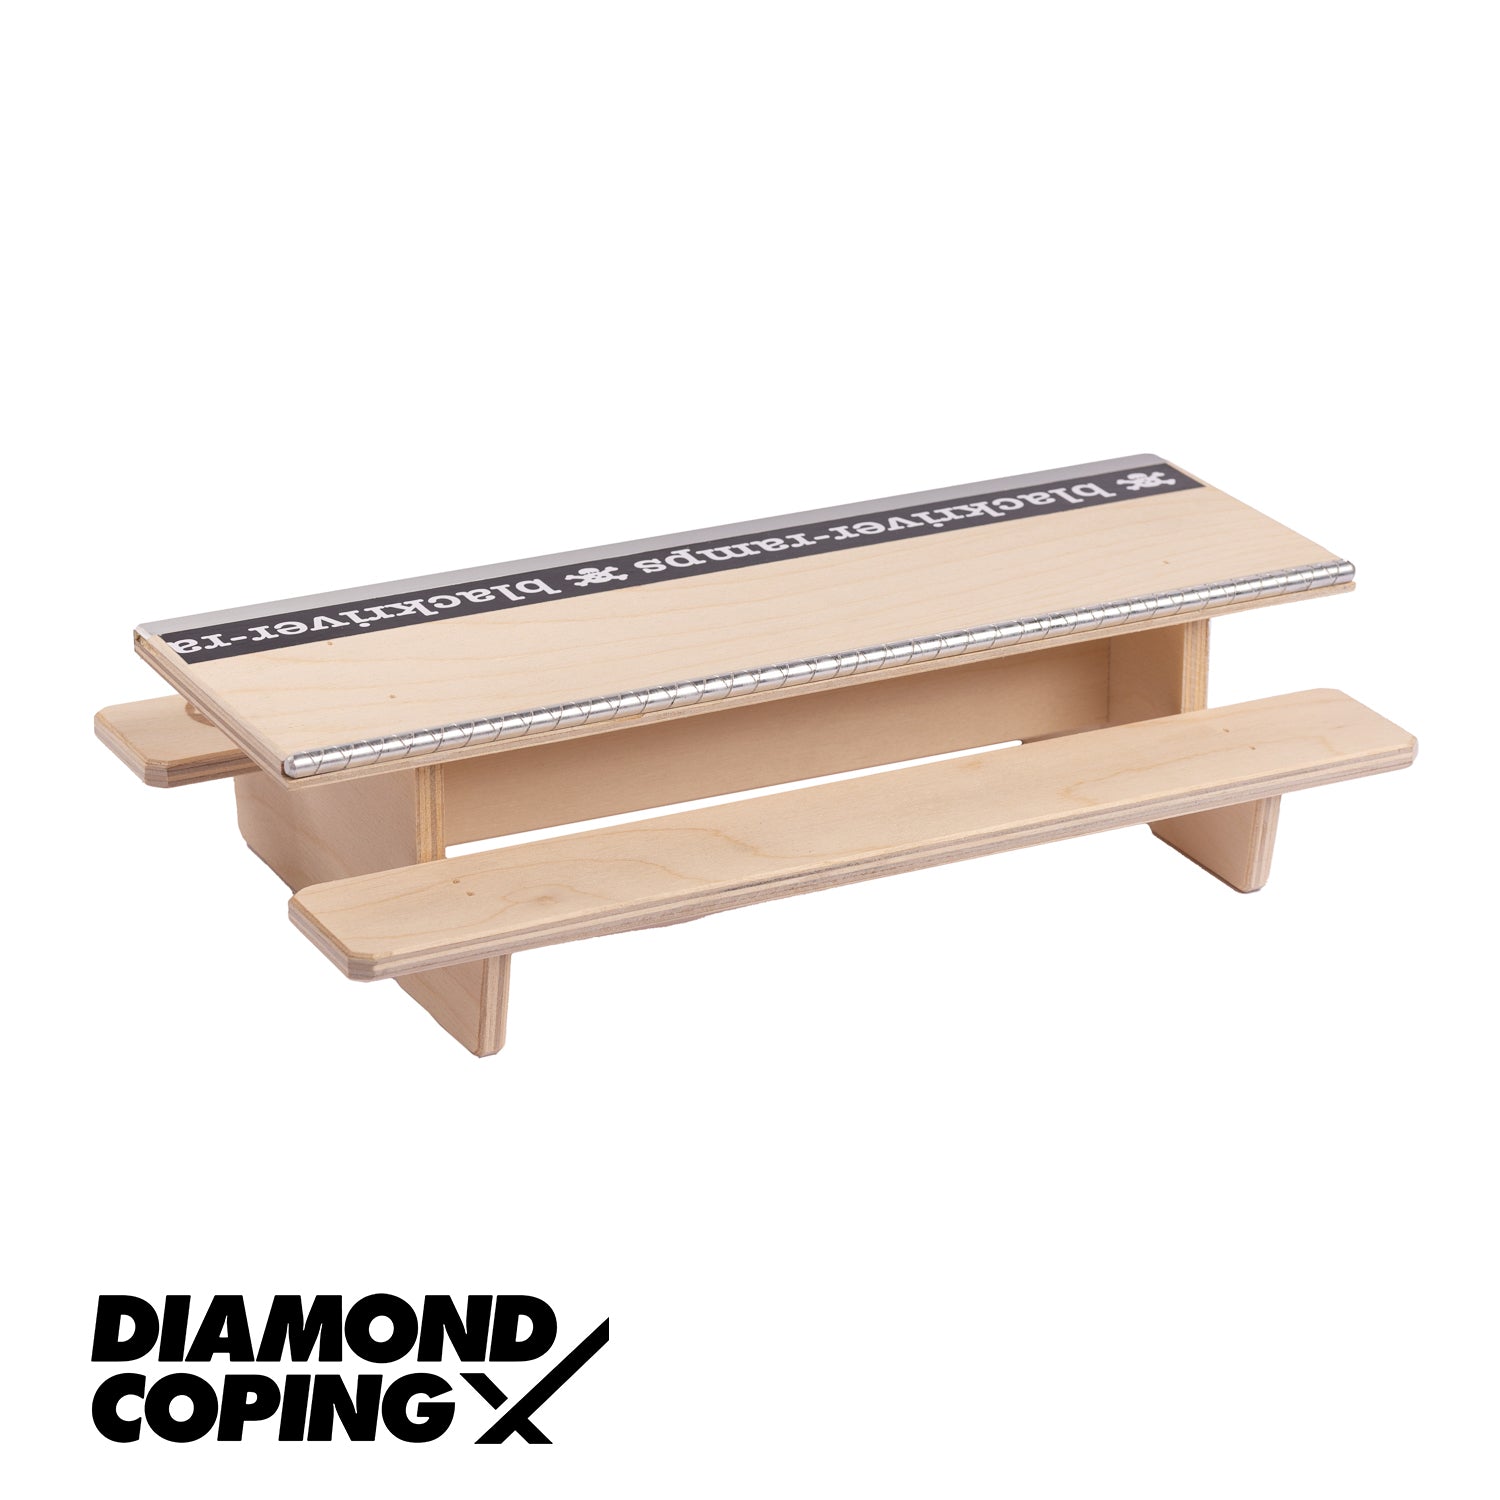 Blackriver Ramps Fingerboard Table - DIAMOND COPING